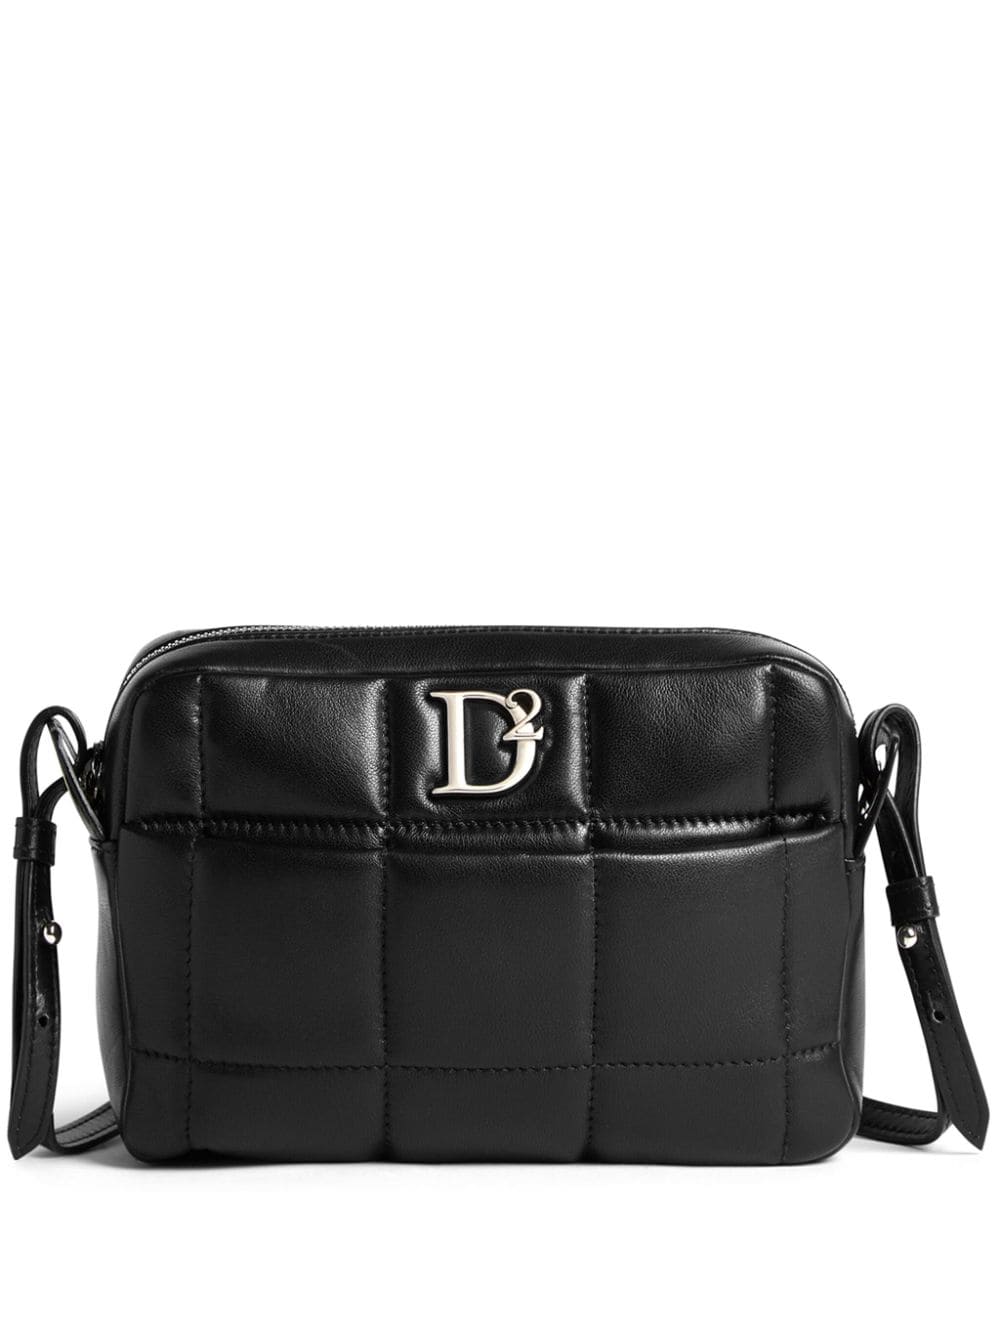 Dsquared2 D2 Statement leather crossbody bag - Black von Dsquared2